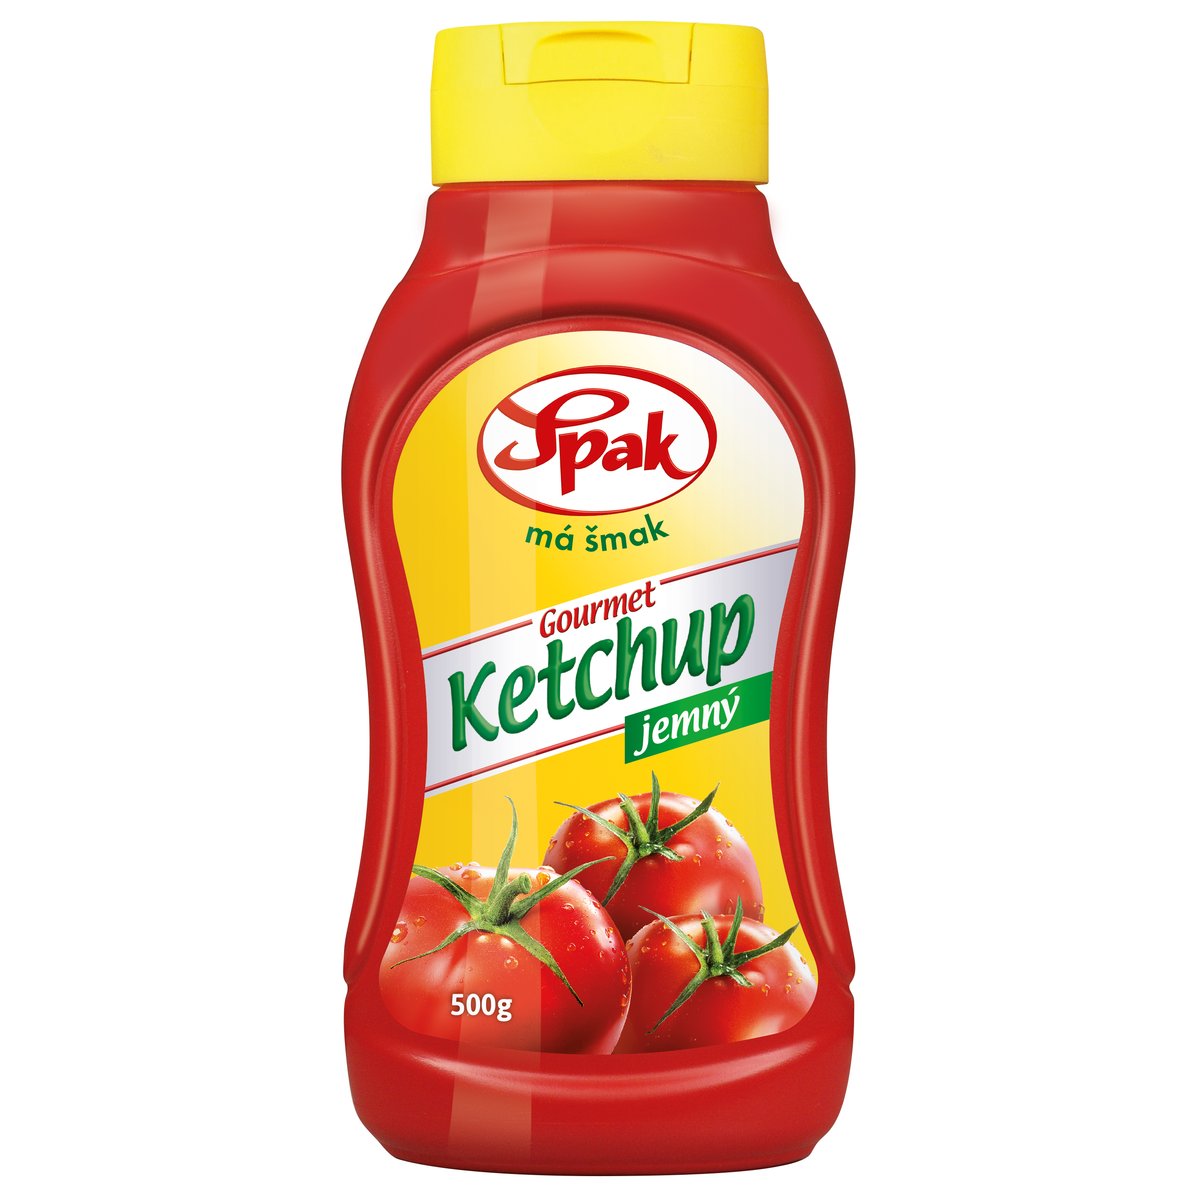 Spak Gourmet Ketchup jemný